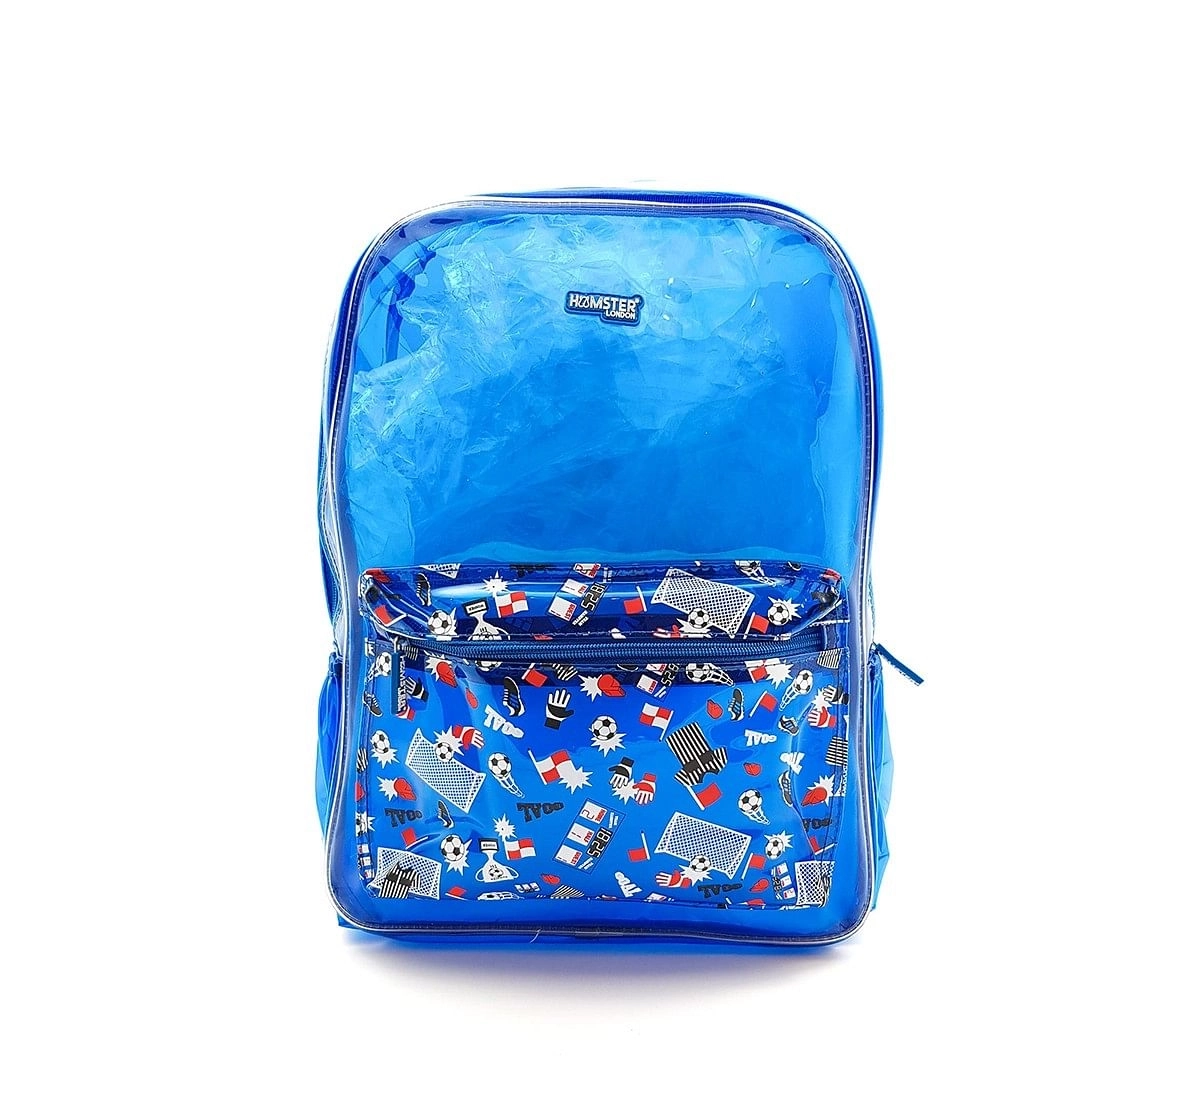 Hamster London Football Backpack for Kids age 3Y+ (Blue)